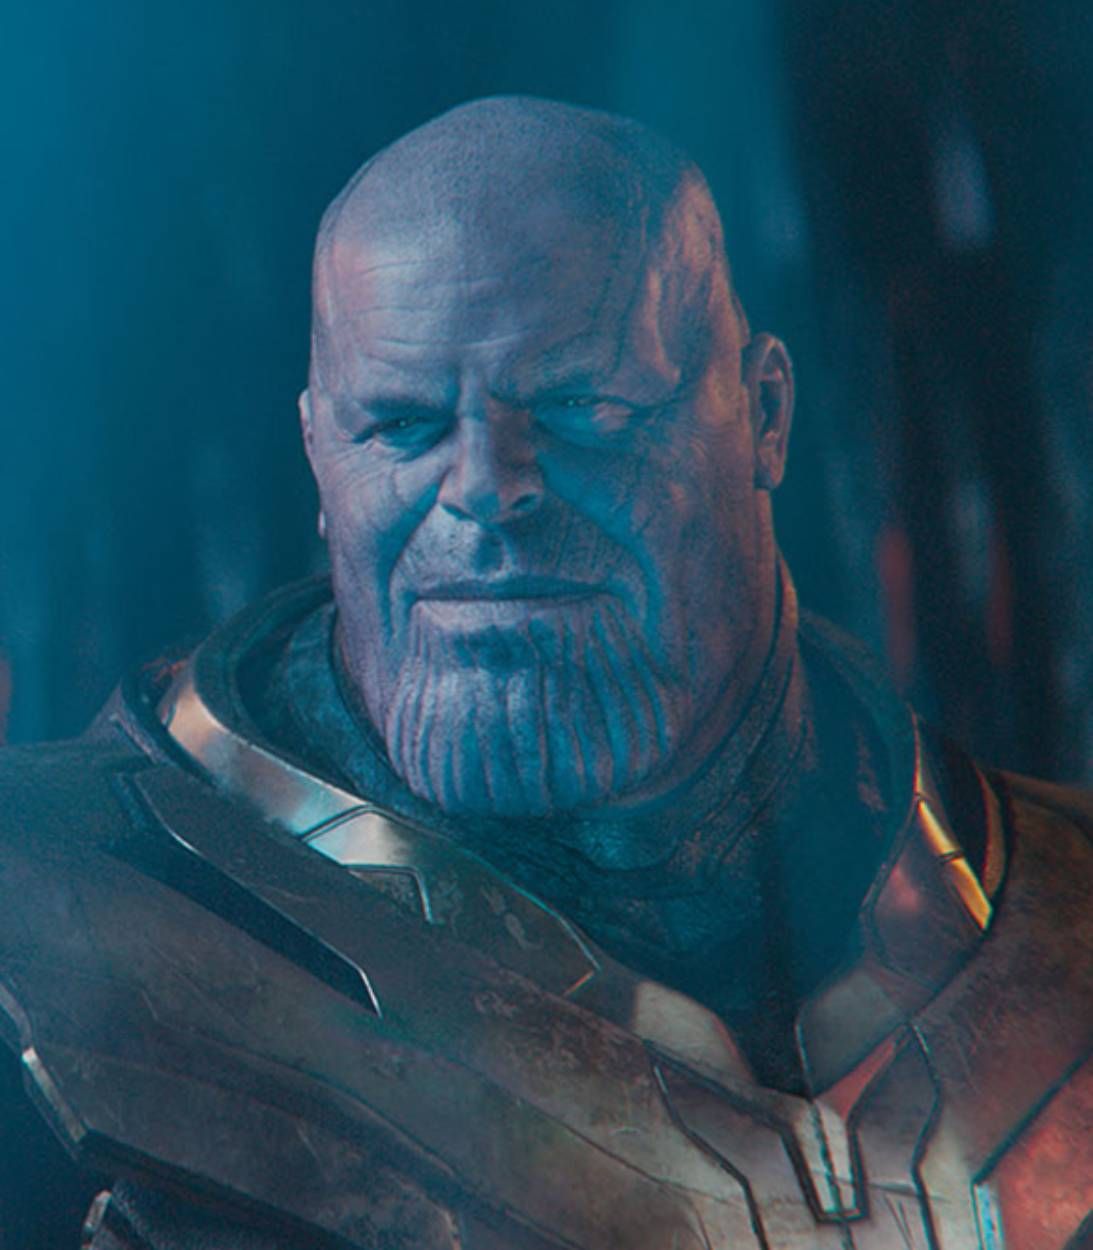 Thanos Avengers Endgame image vertical